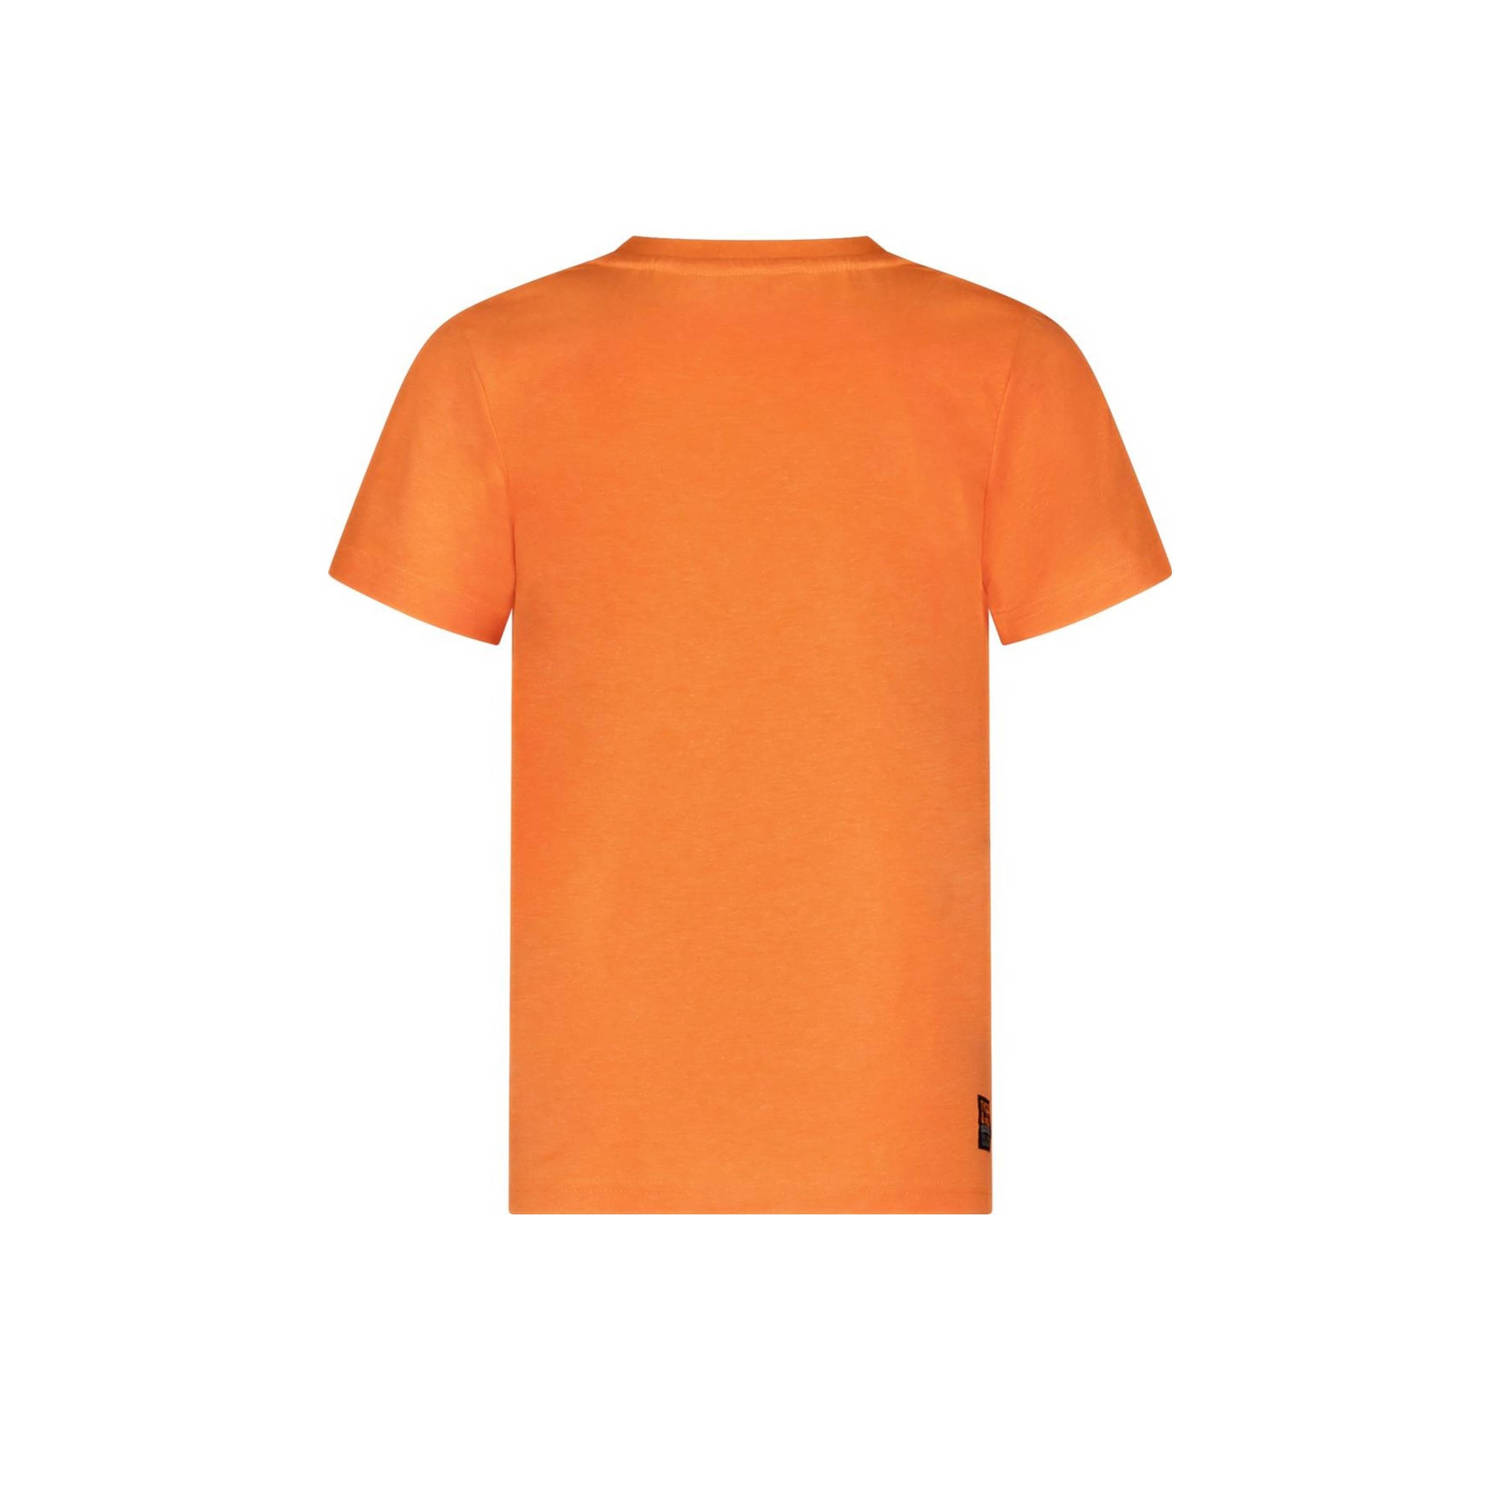 TYGO & vito T-shirt Holland met contrastbies oranje